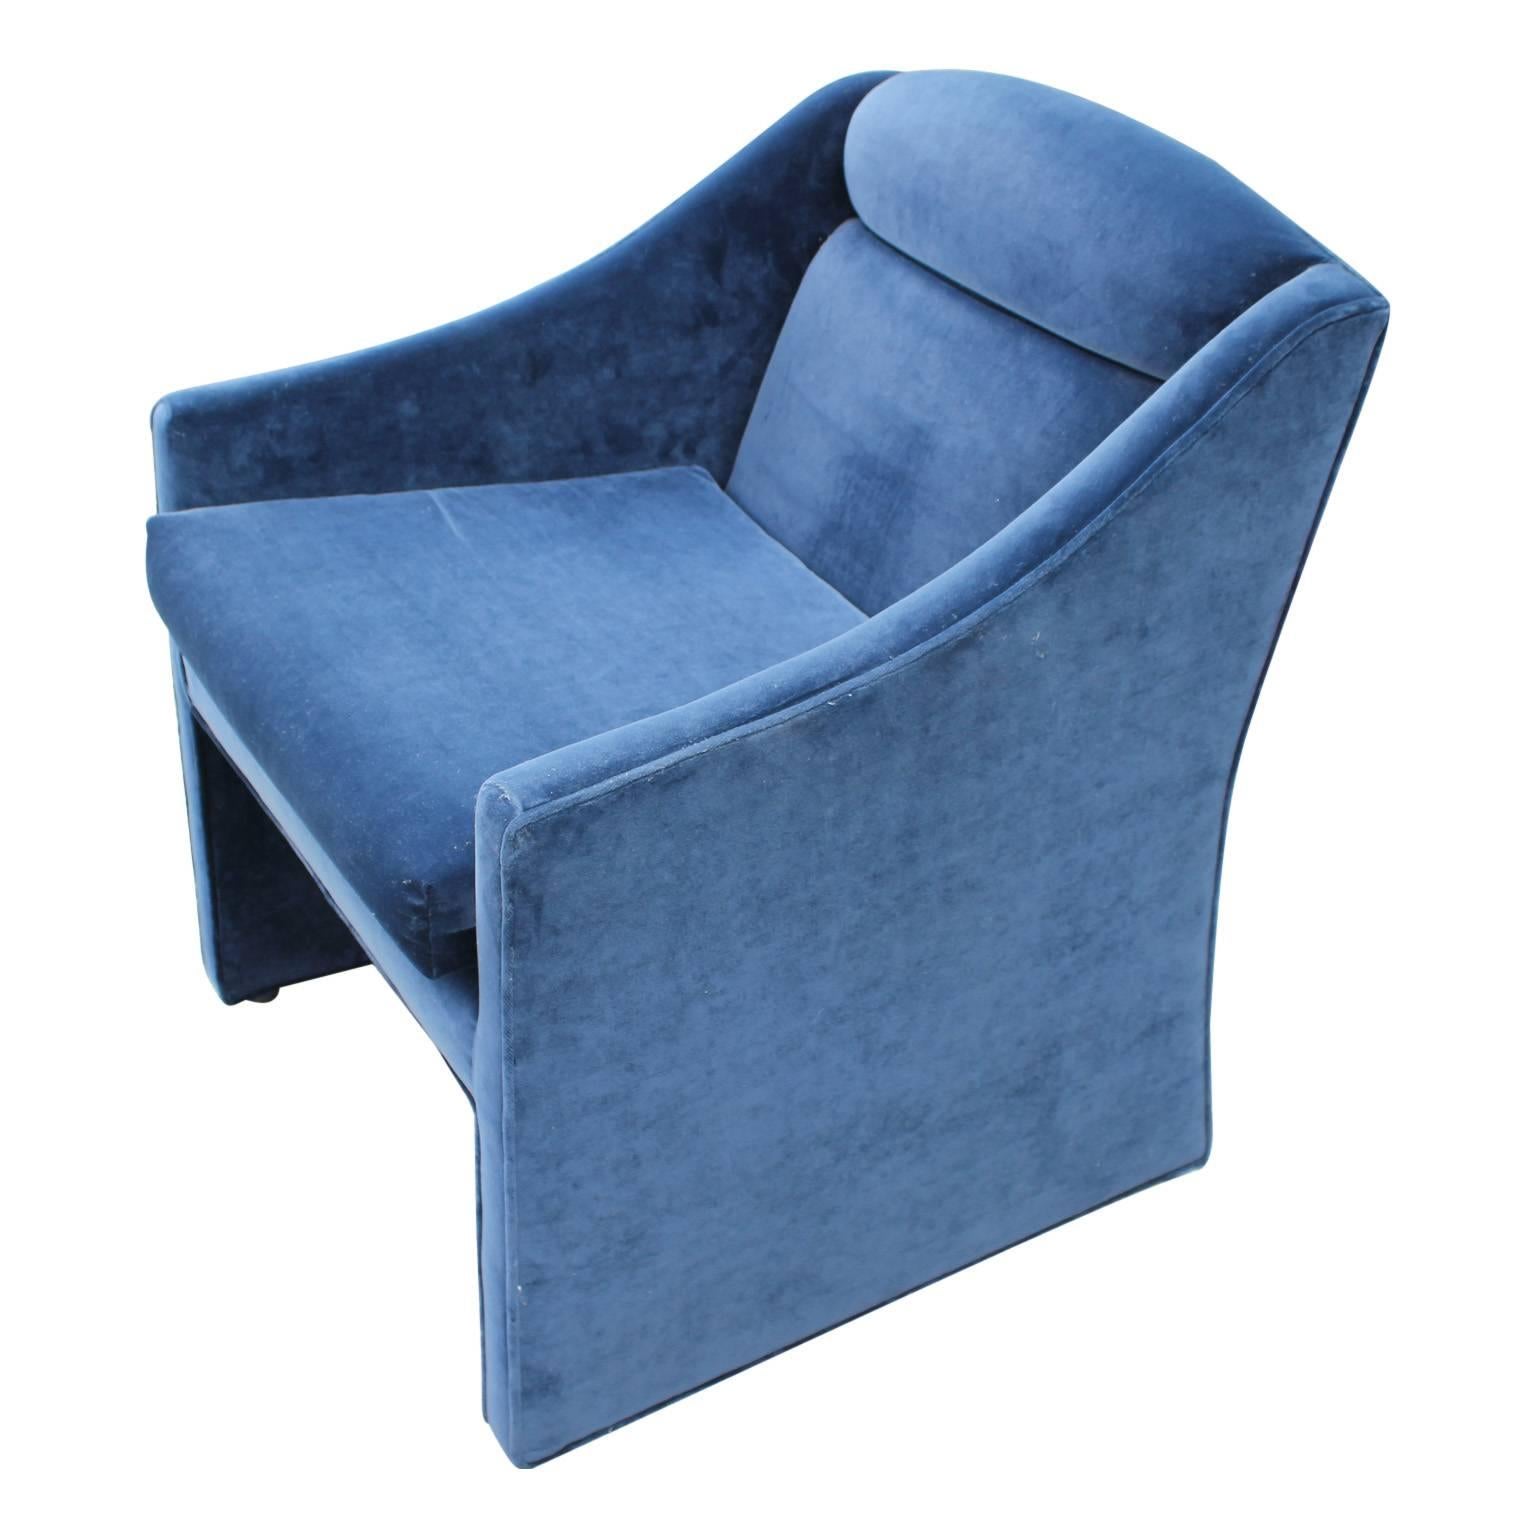 Mid-Century Modern Pair of Modern Lounge Chairs Fully Upholstered in Original Deep Blue Velvet